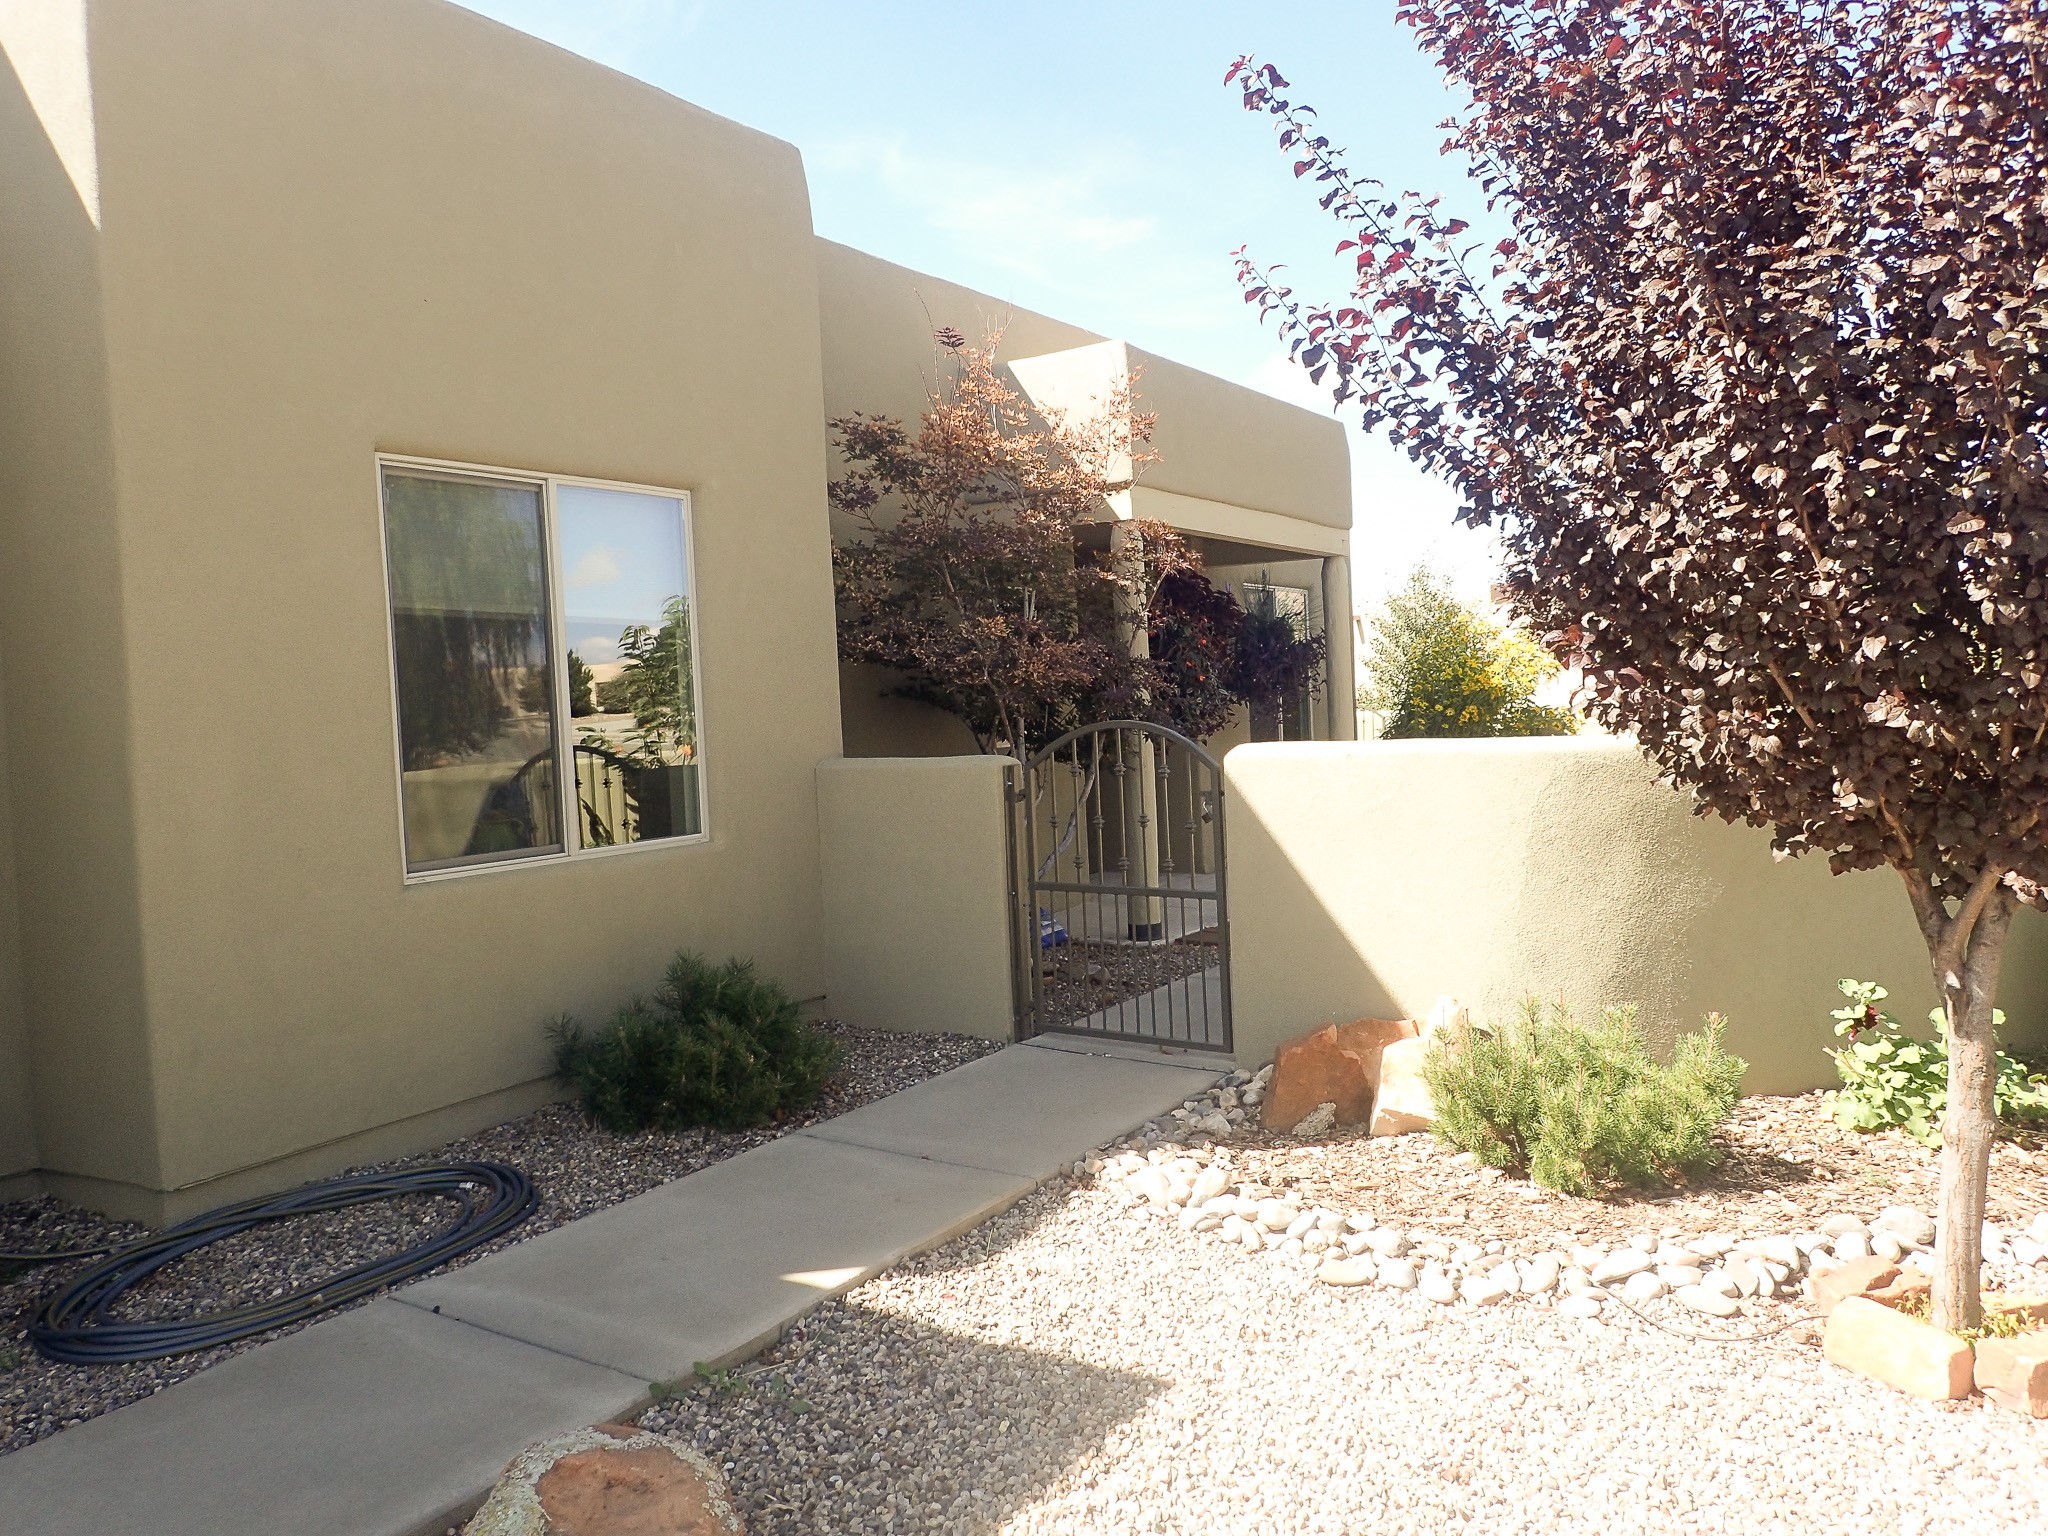 43 Caballo Viejo, Santa Fe, New Mexico 87508, 3 Bedrooms Bedrooms, ,2 BathroomsBathrooms,Residential,For Sale,43 Caballo Viejo,202401396